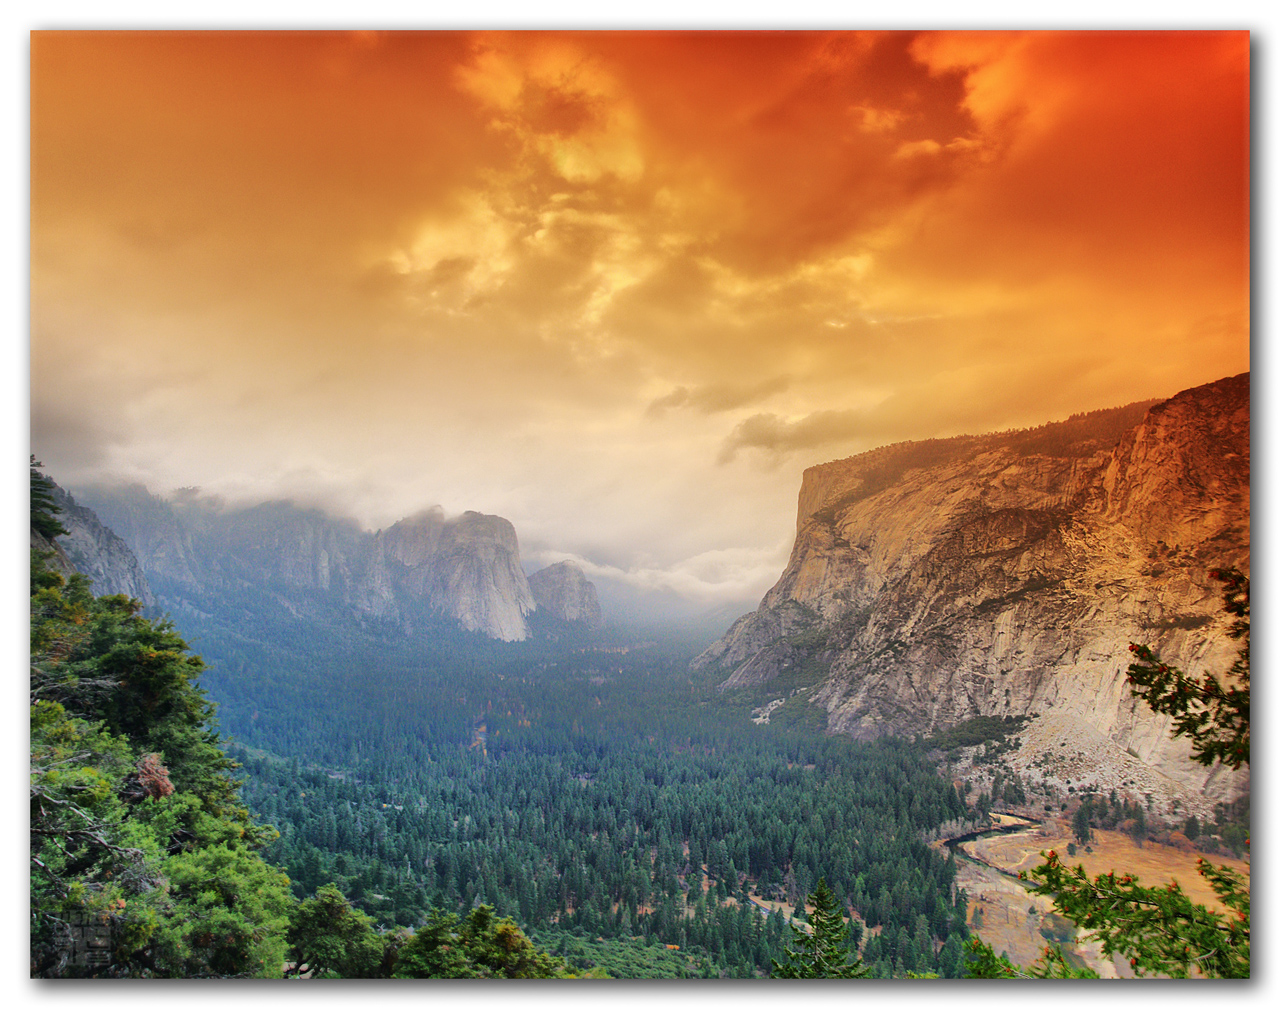 The Taking of Yosemite Valley, California